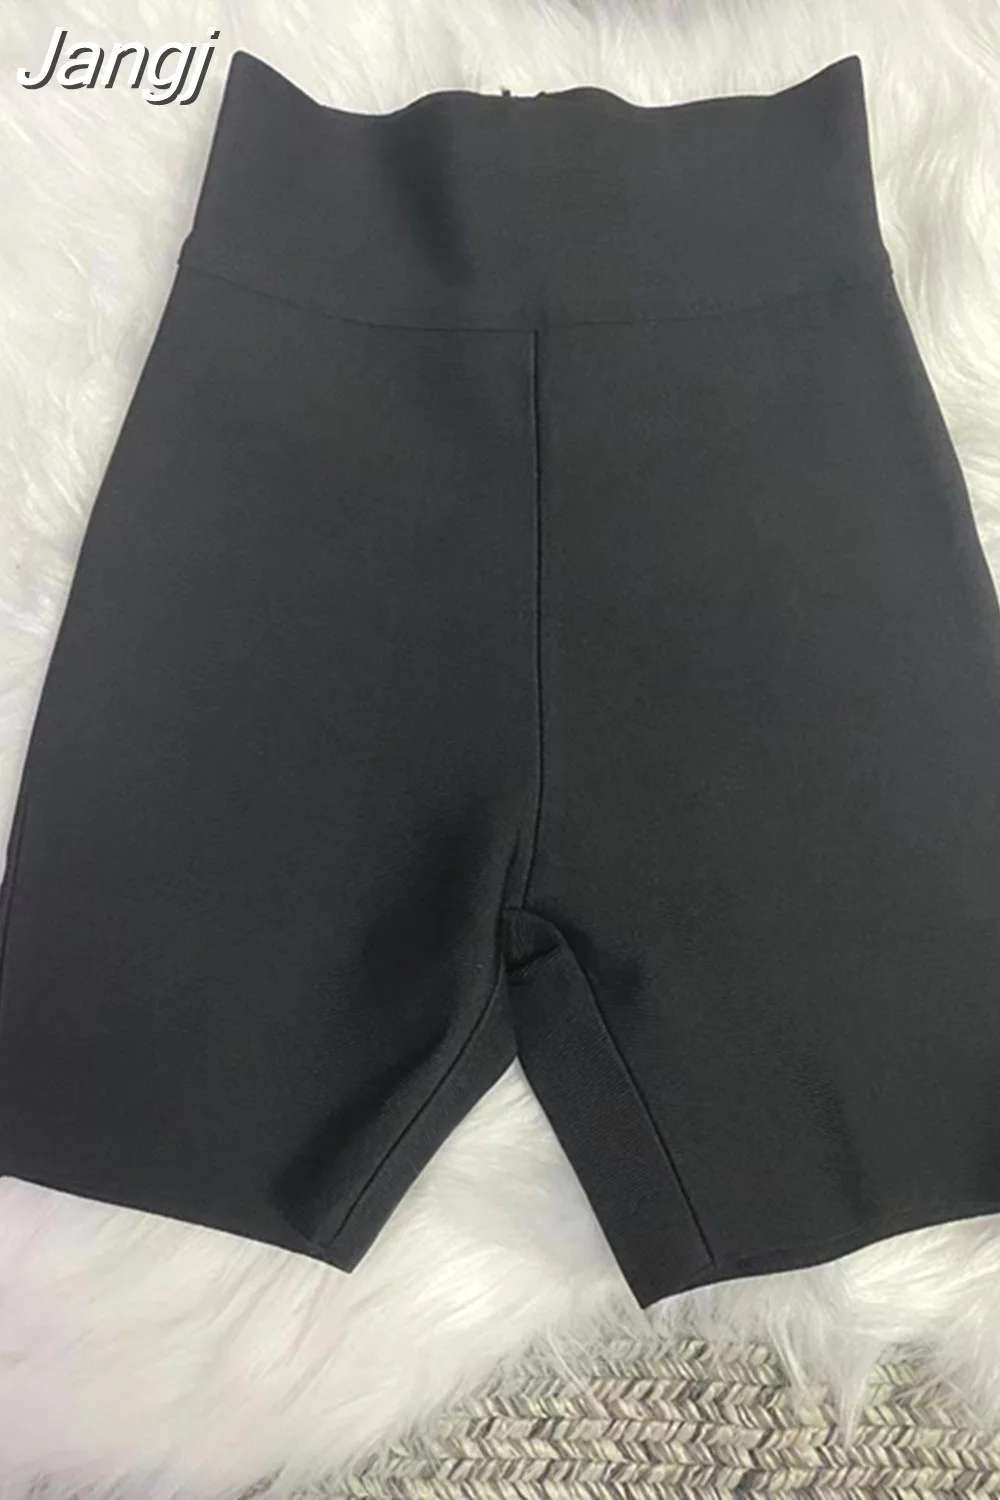 Jangj Colors Bandage Shorts White Black Grey Bandage Short Pants High Waist Top Quality Rayon Vintage Shorts